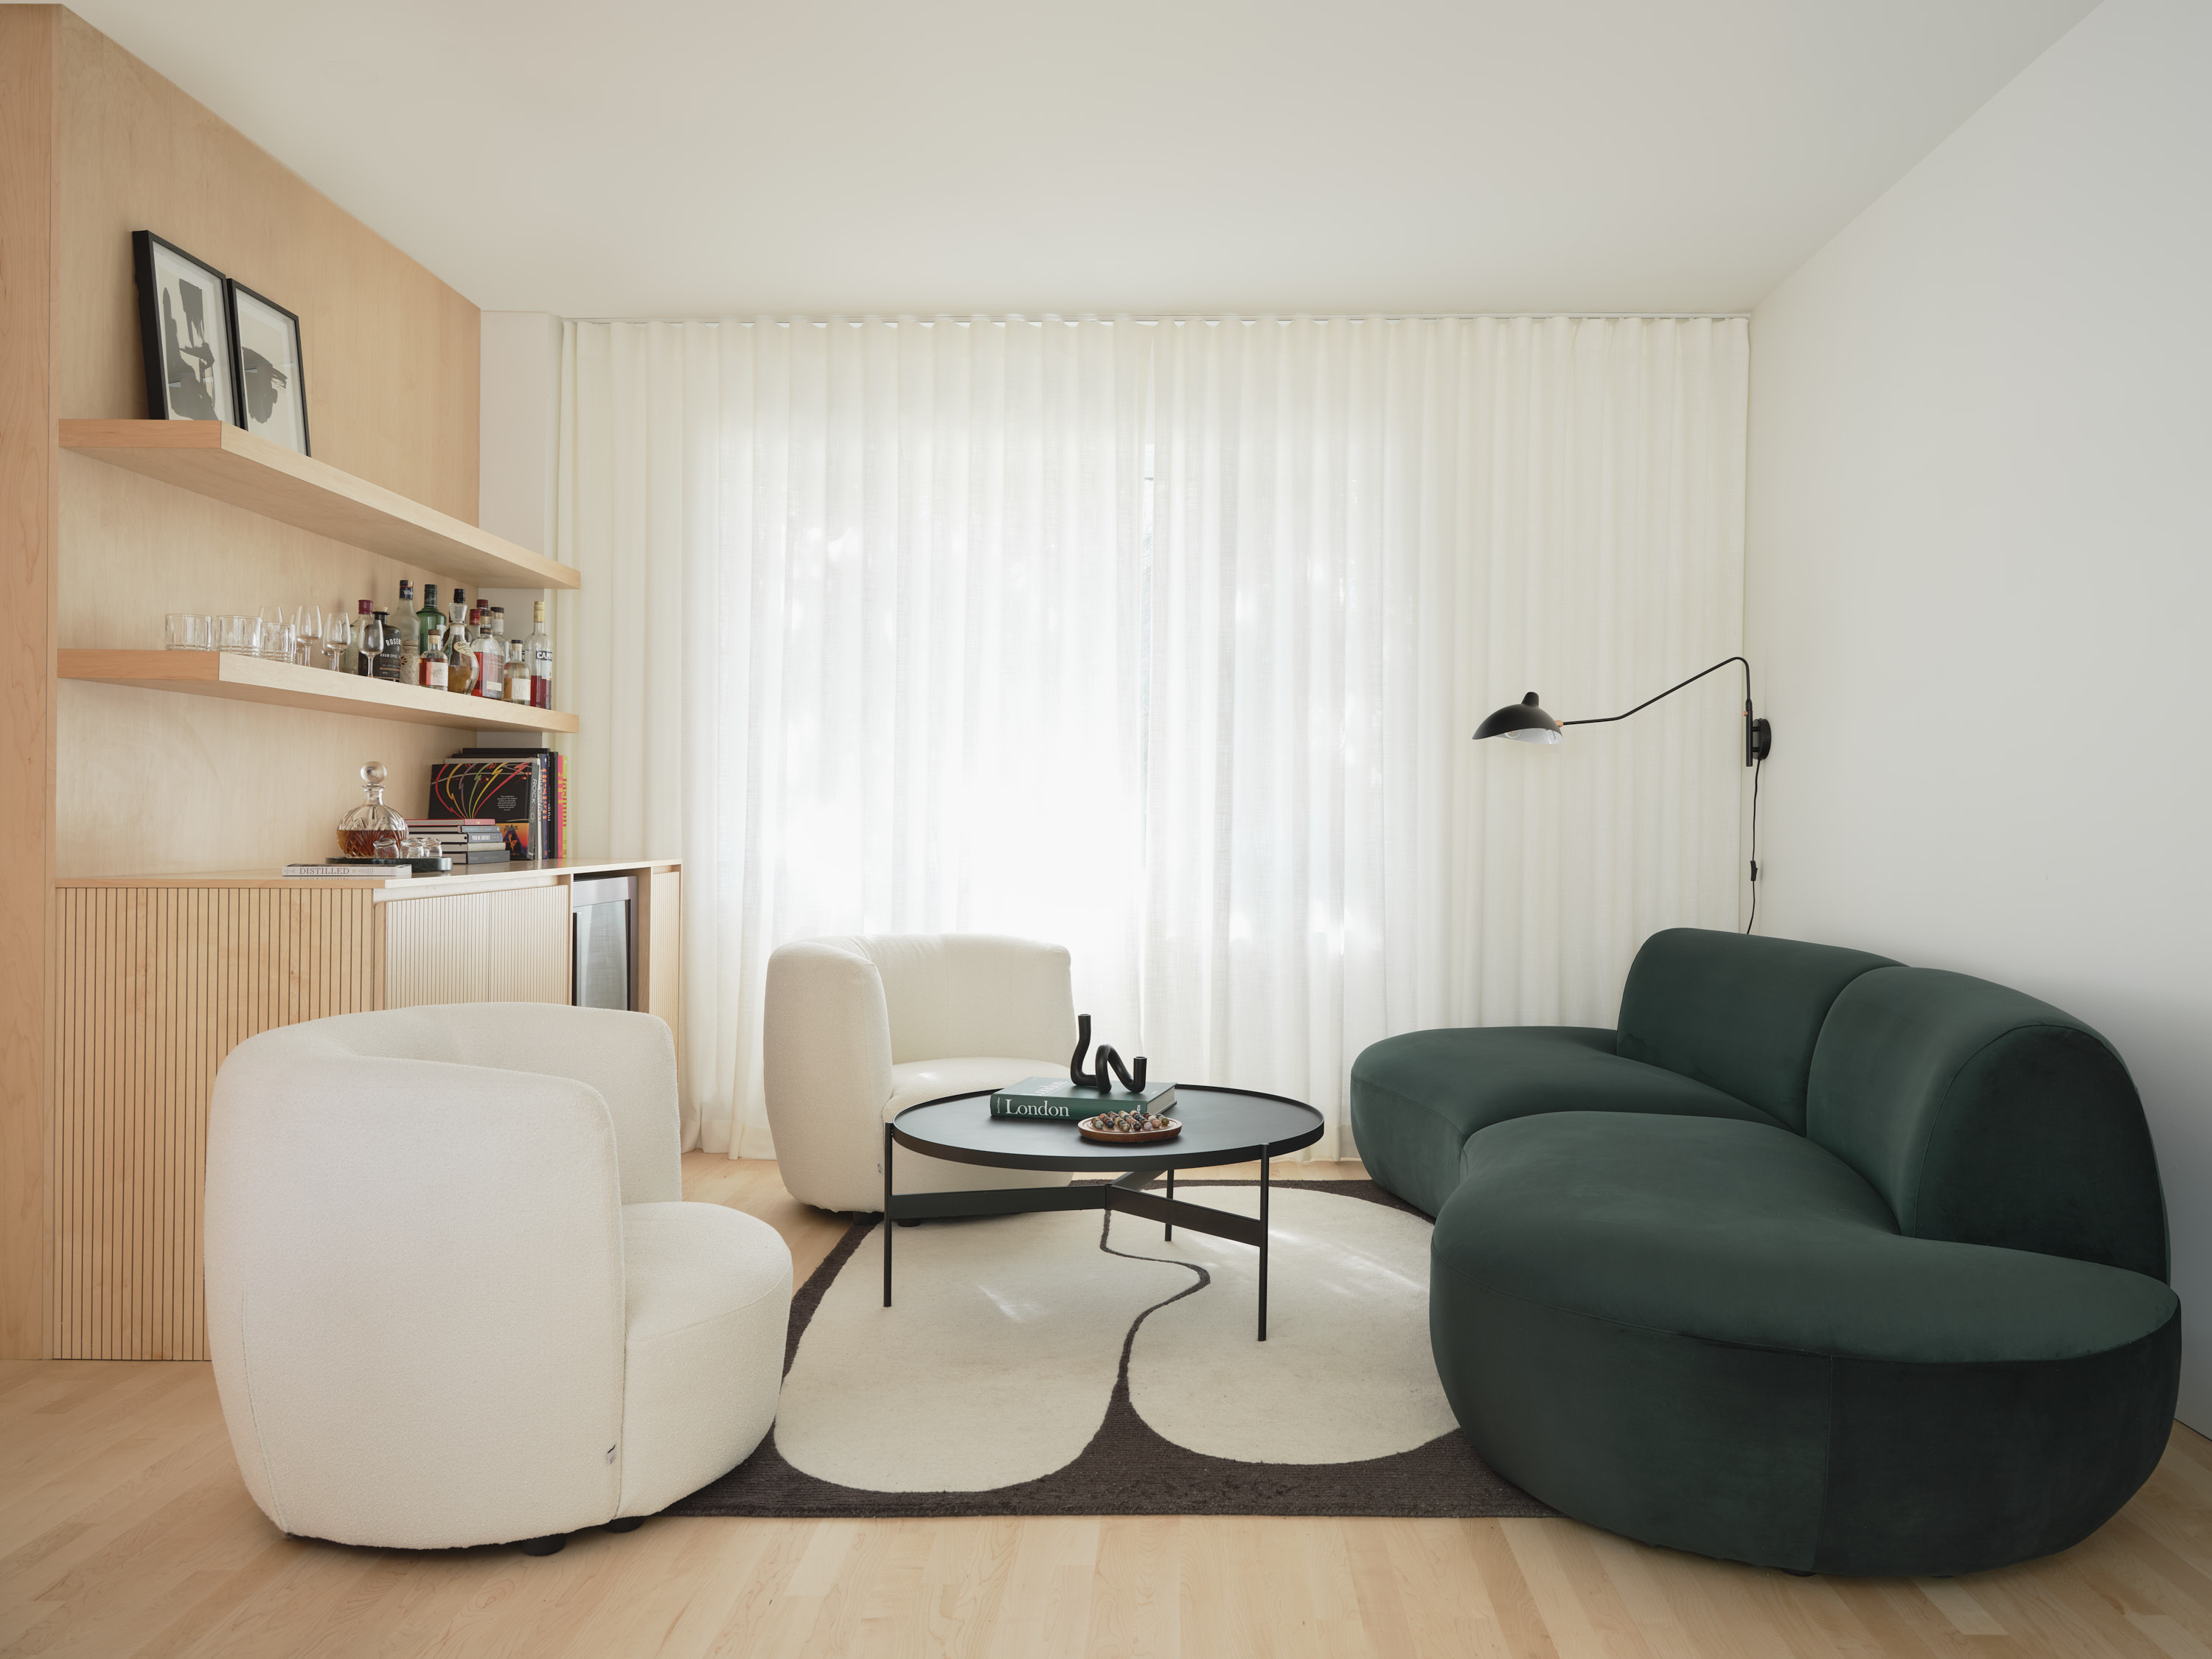 Blush Pink Sofa: Living Room Decor Inspiration - Pretty Little Details